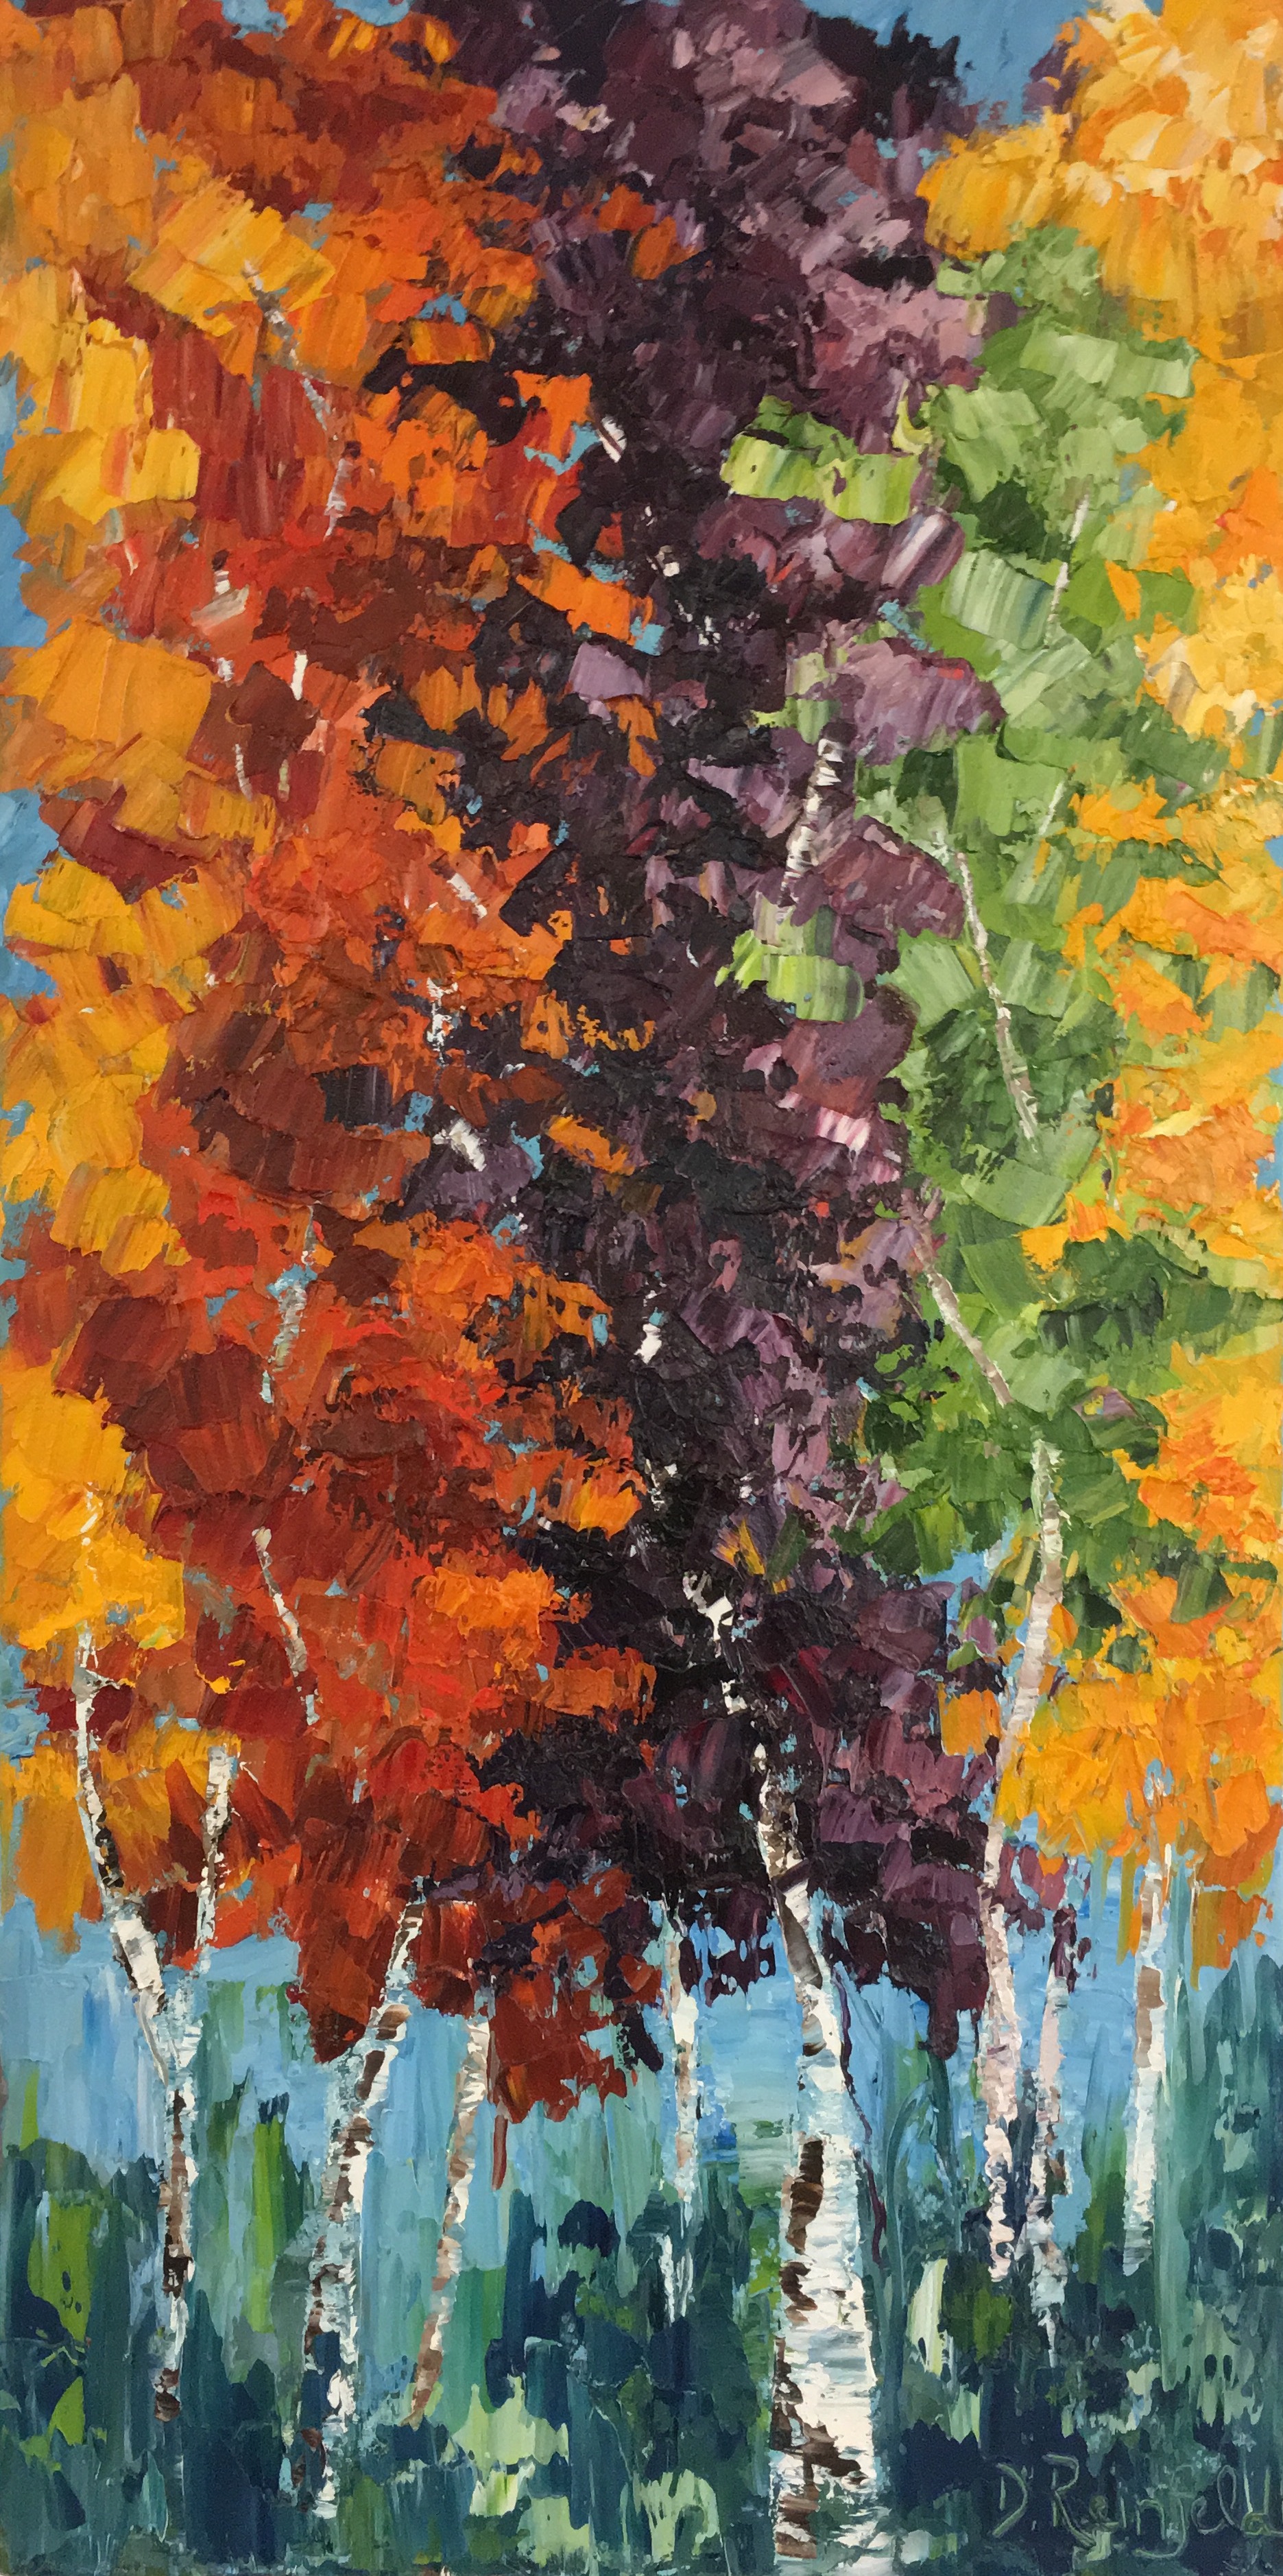 Bright Tomorrow, oil on canvas, 36"x18" $985